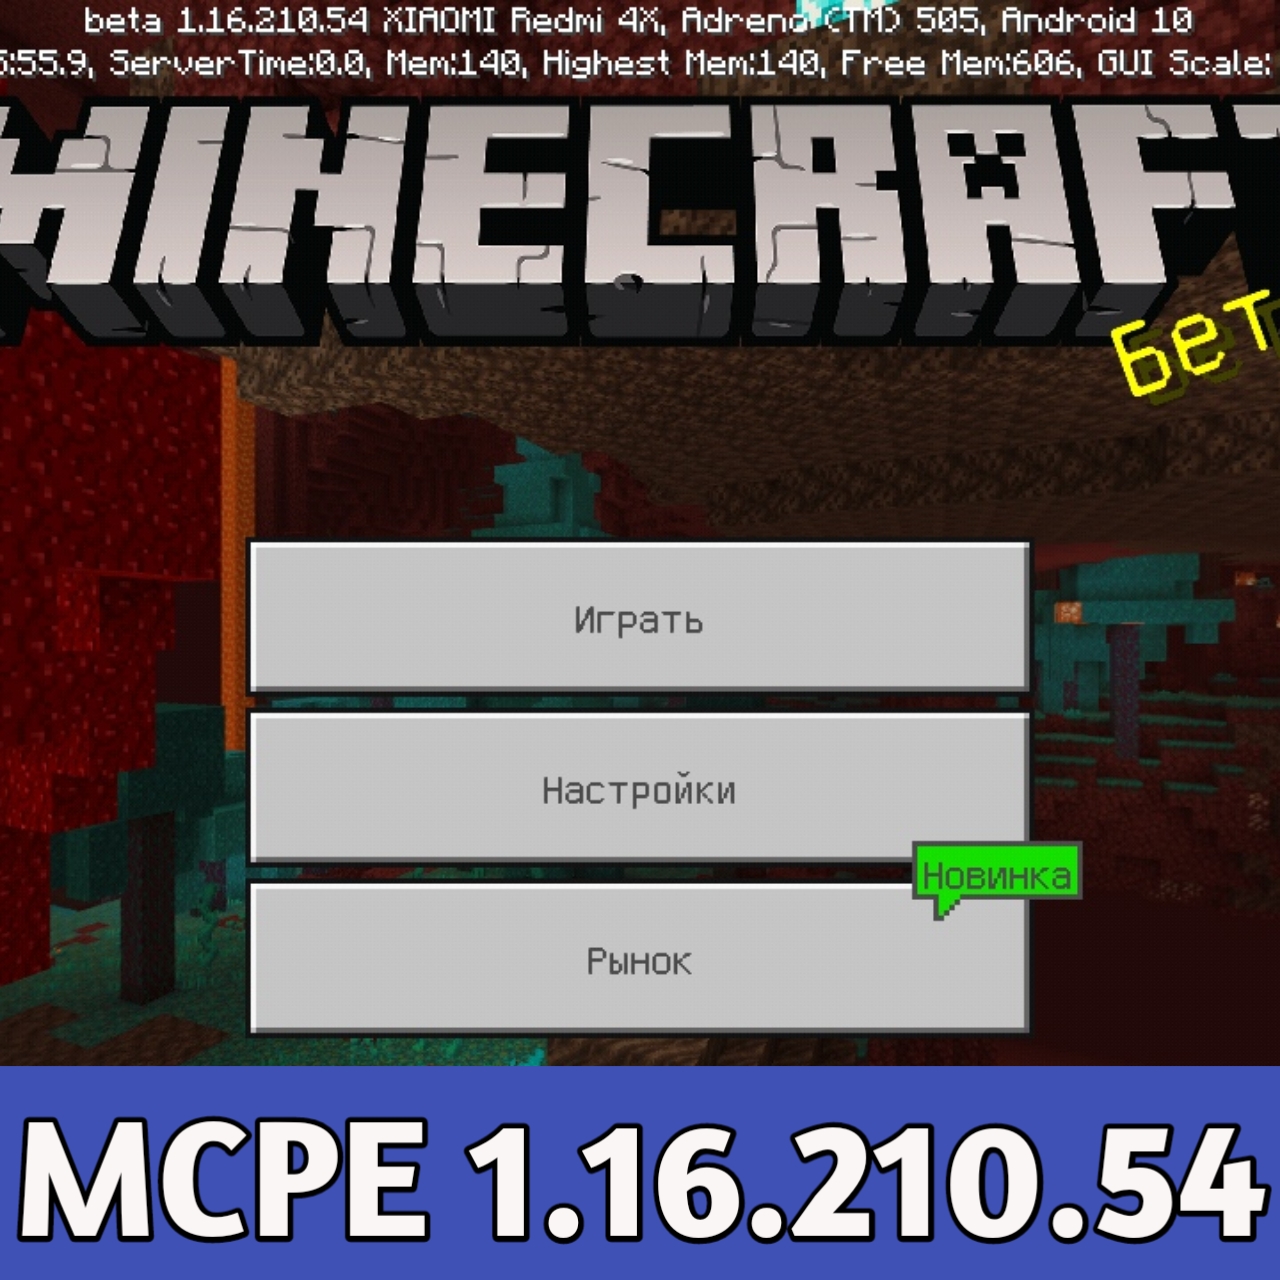 minecraft pe 1.7.0 apk download